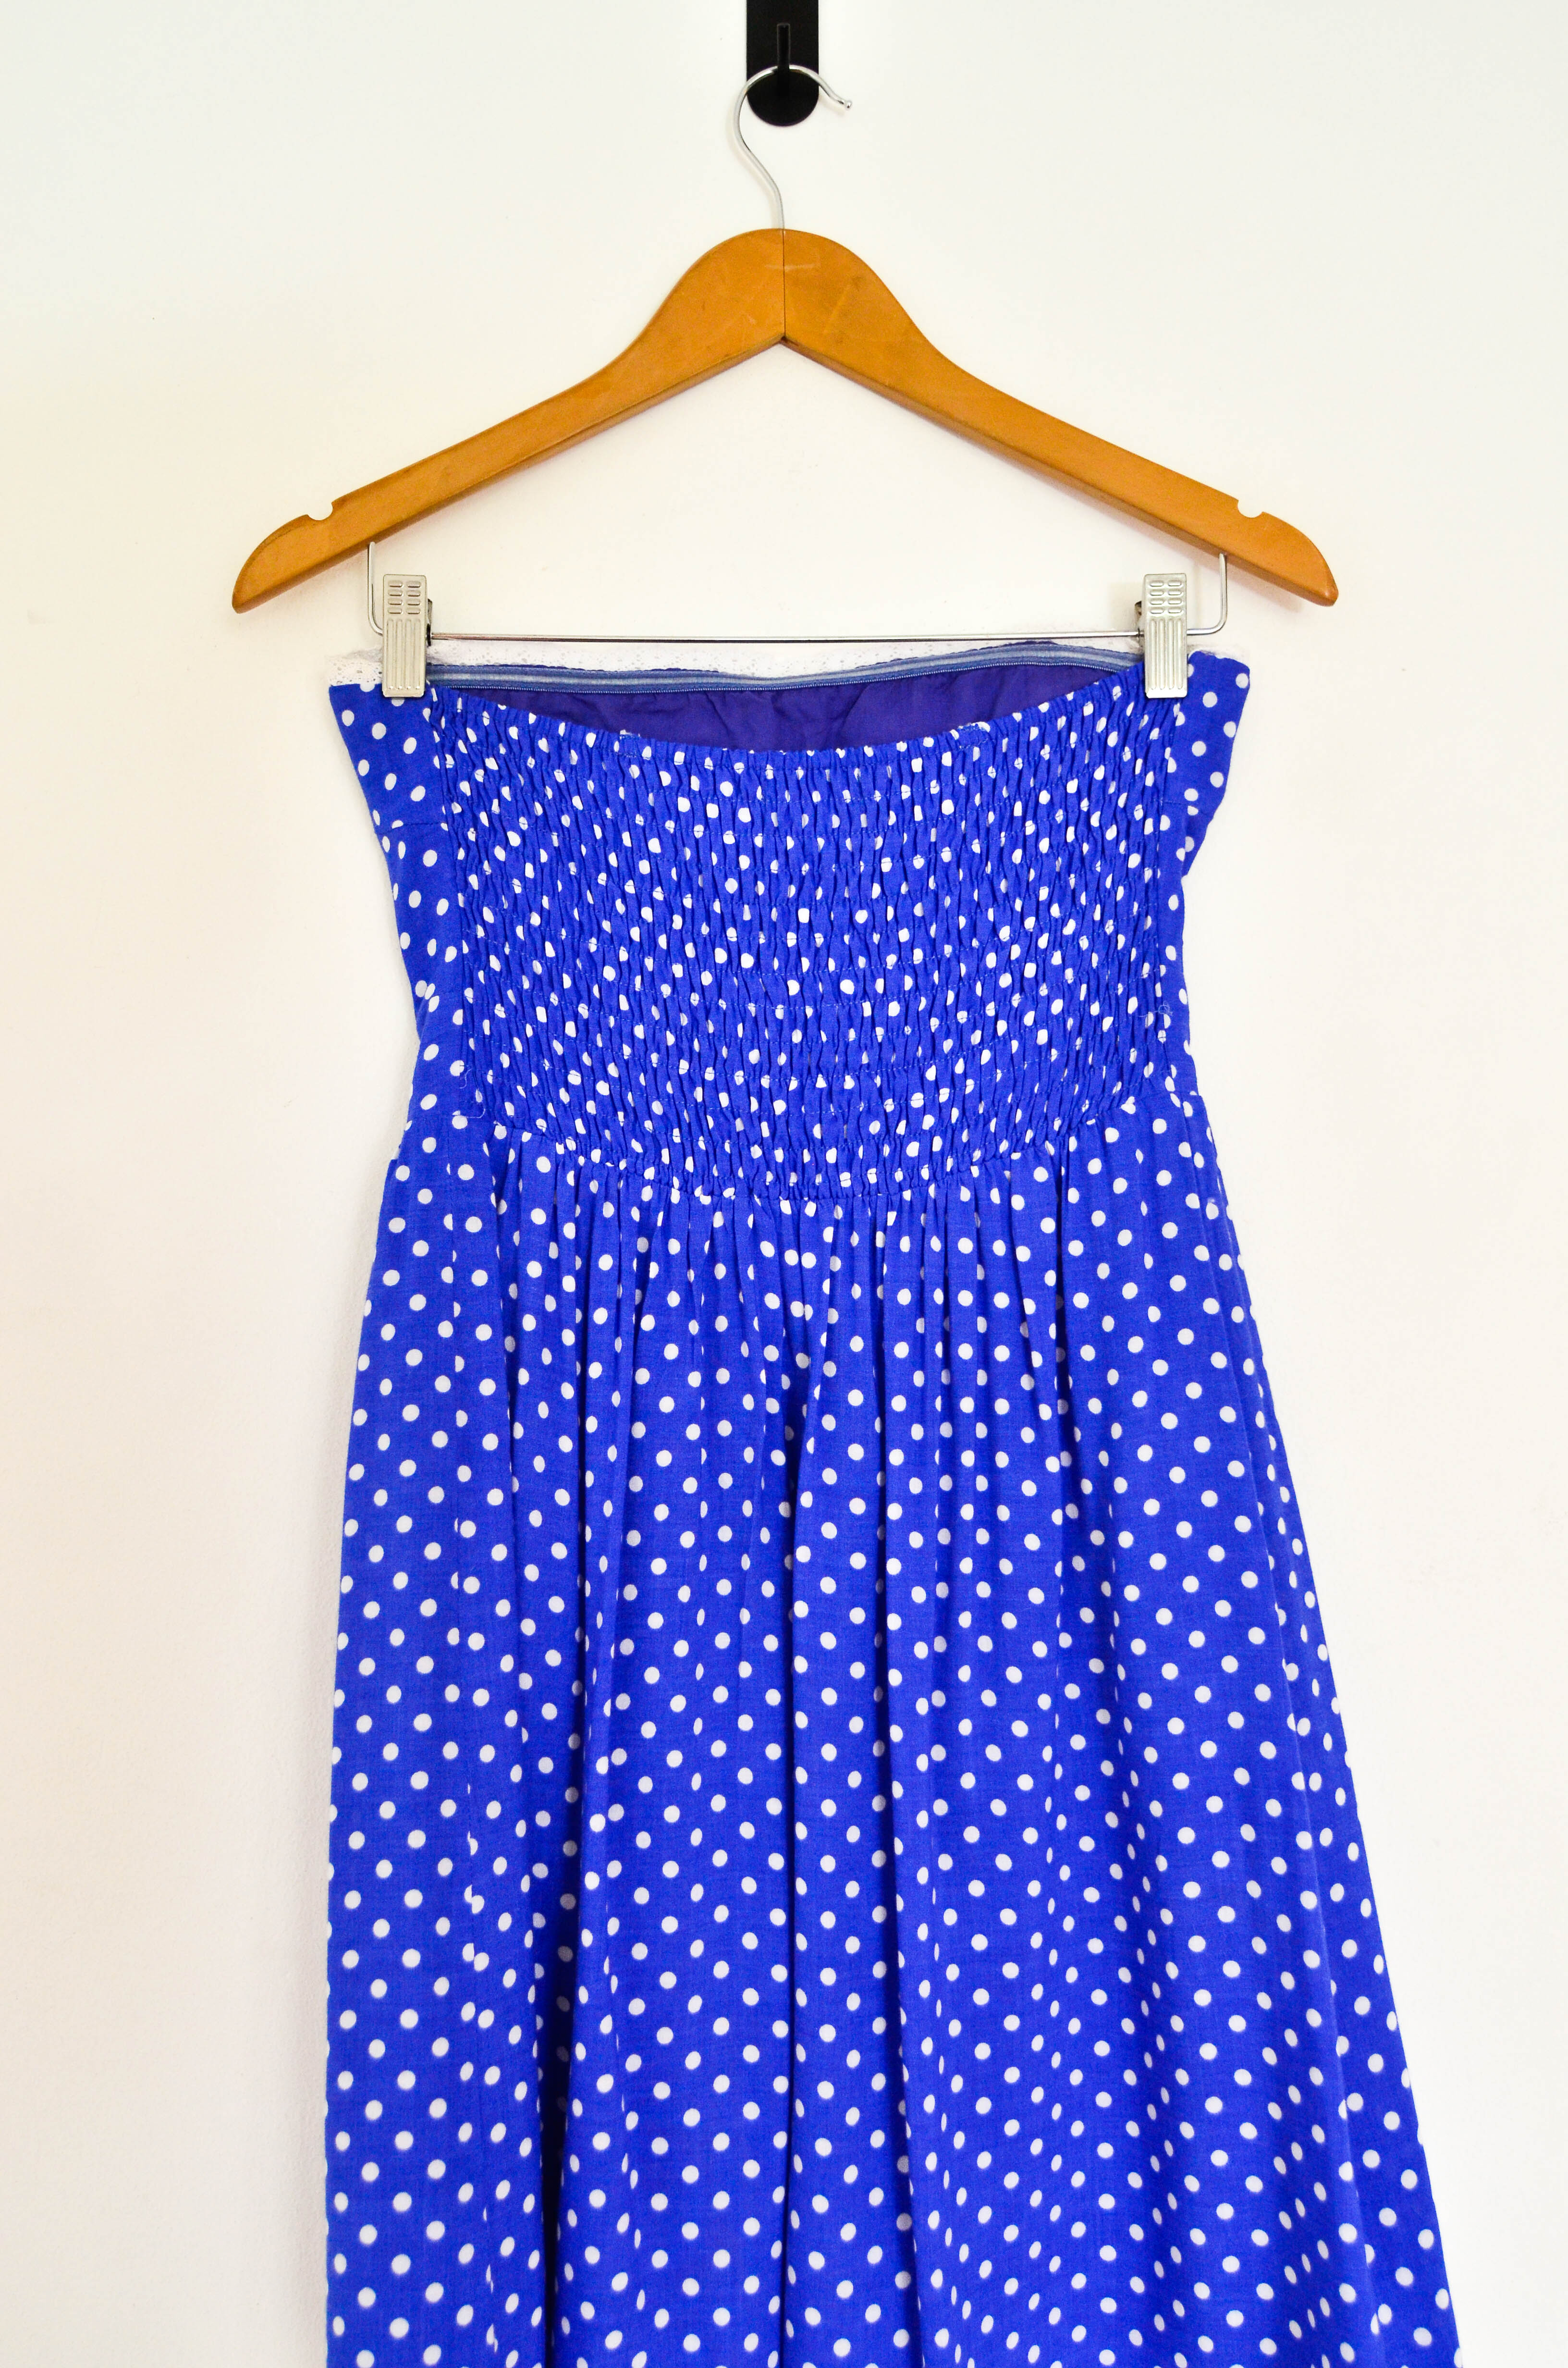 Vestido azulino polka dots